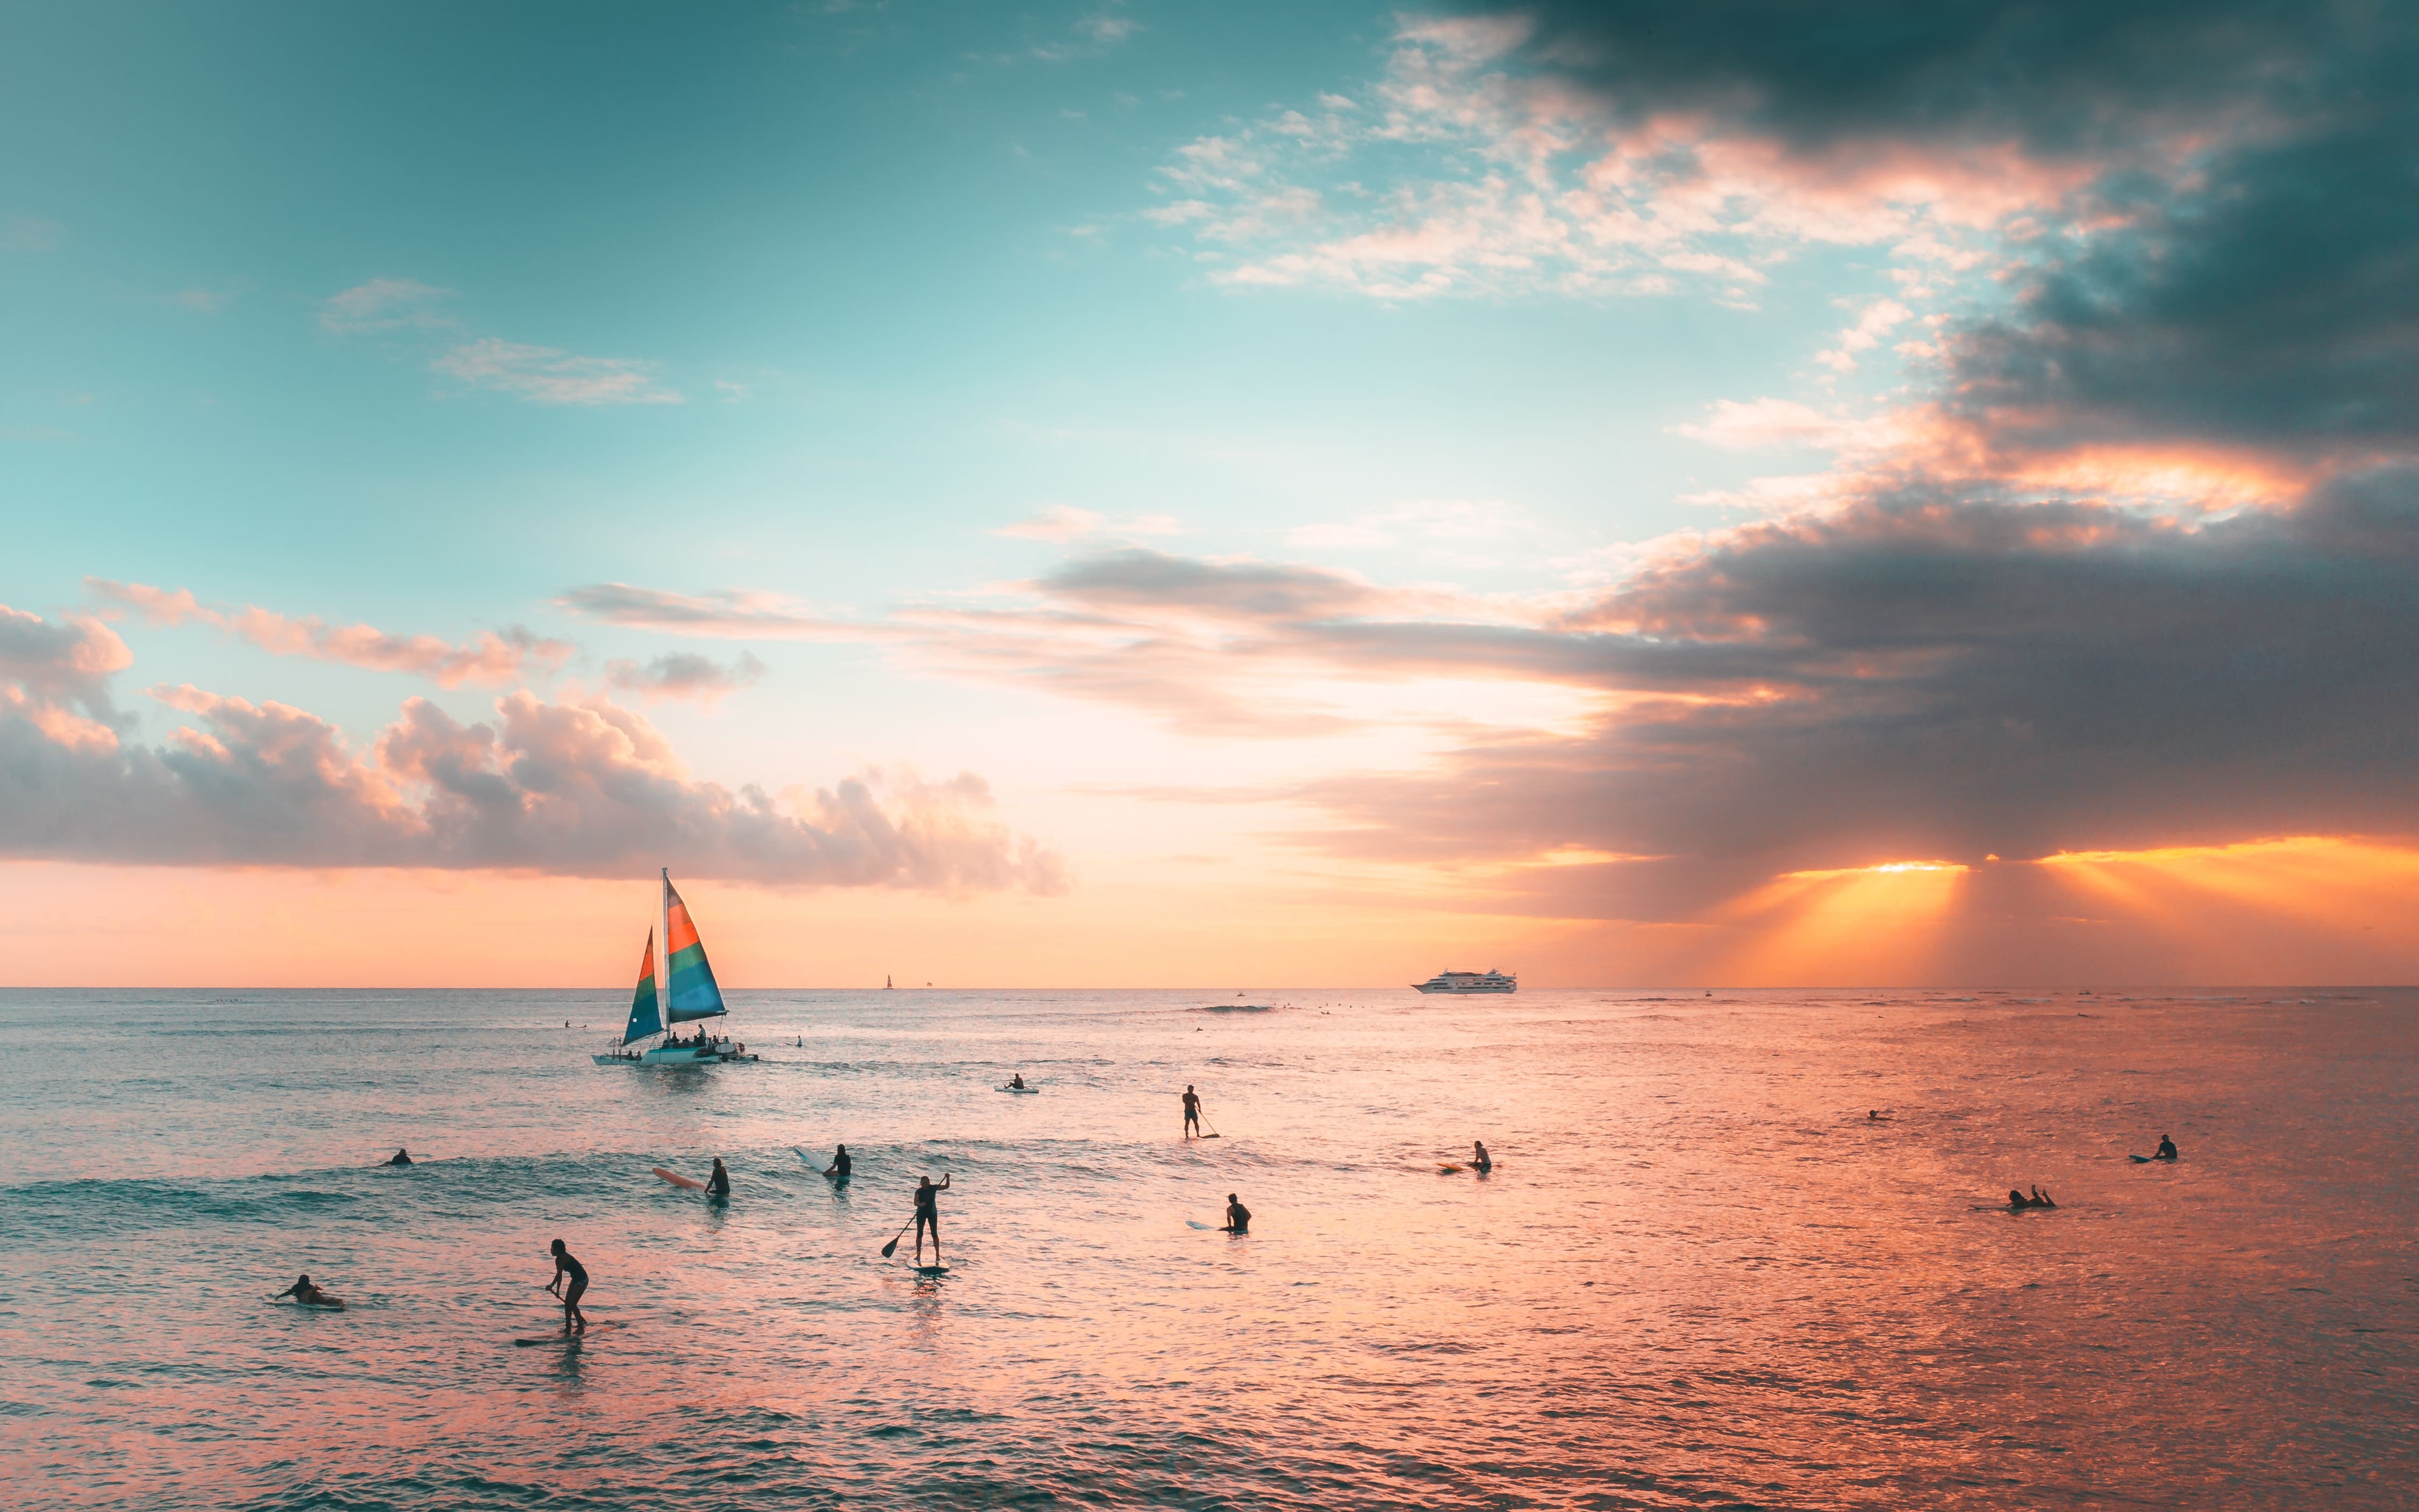 Catamaran Tulum; sunset on a beach